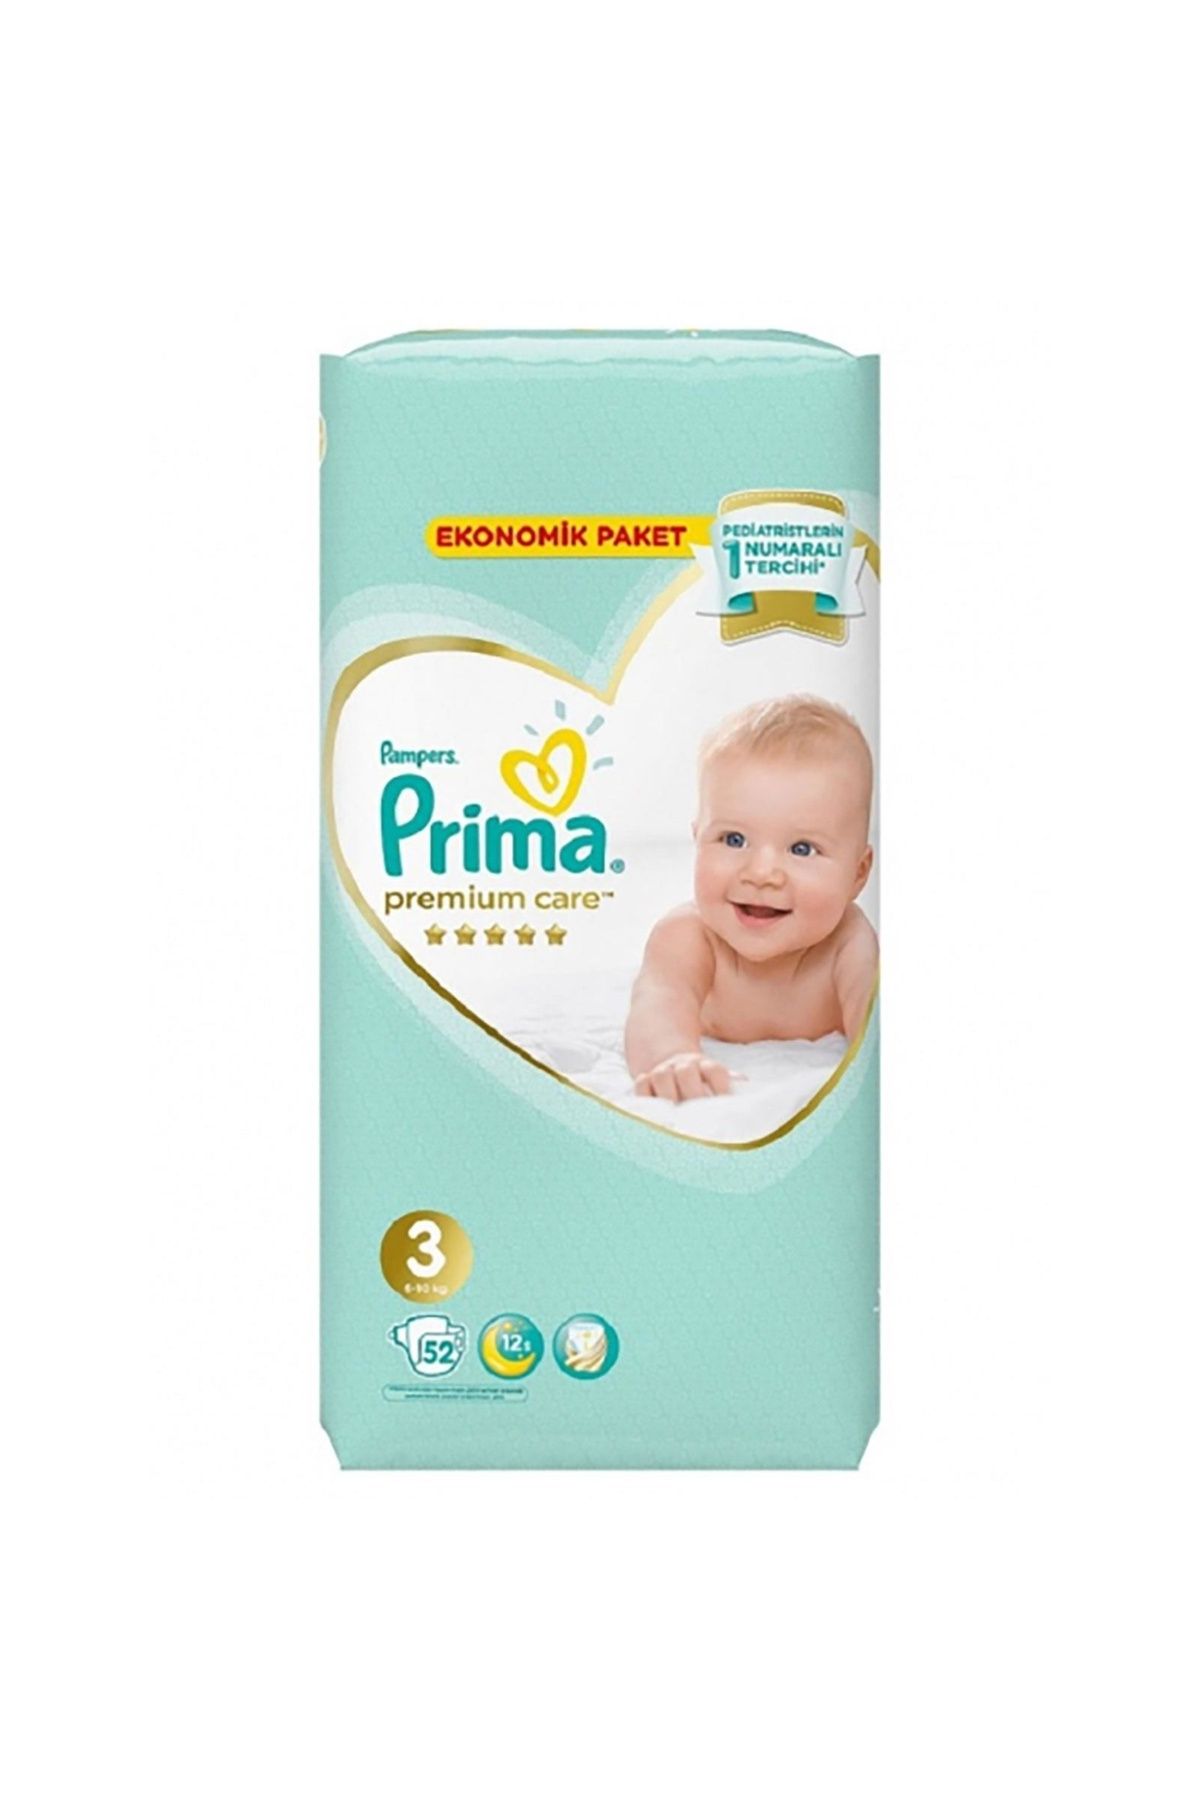 Prima Premium Care Bebek Bezi Ekonomik Paket 3 Beden 52 Adet